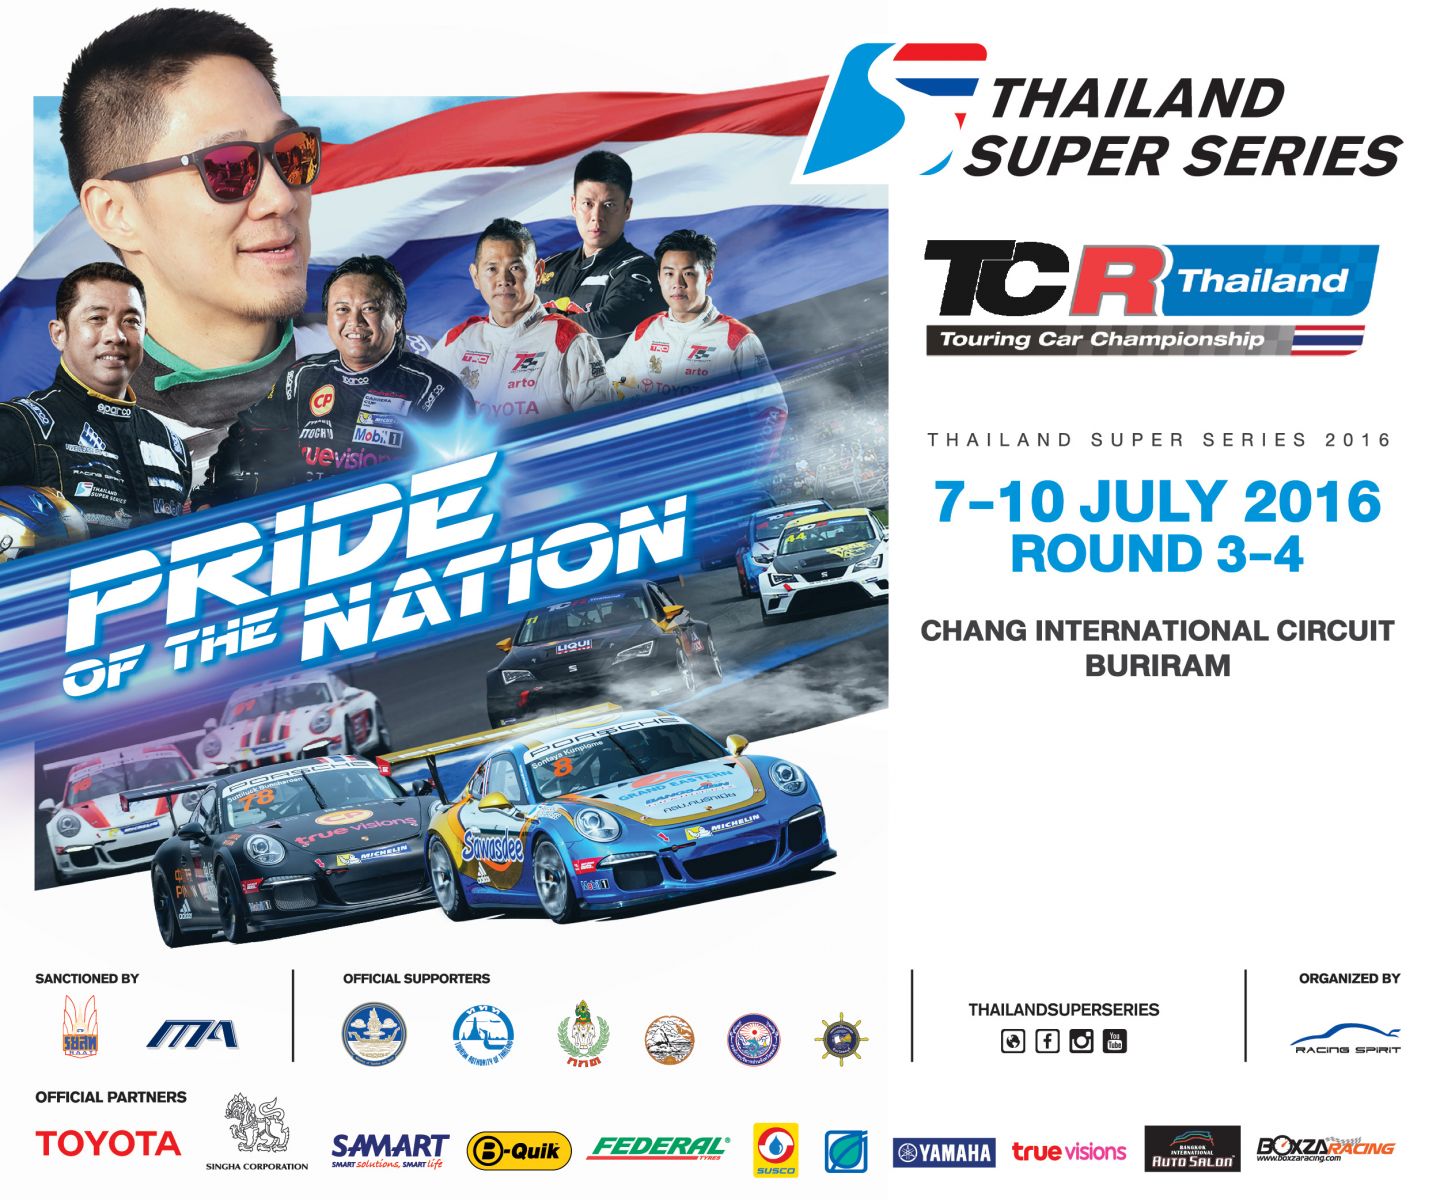 Thailand Super Series 2016